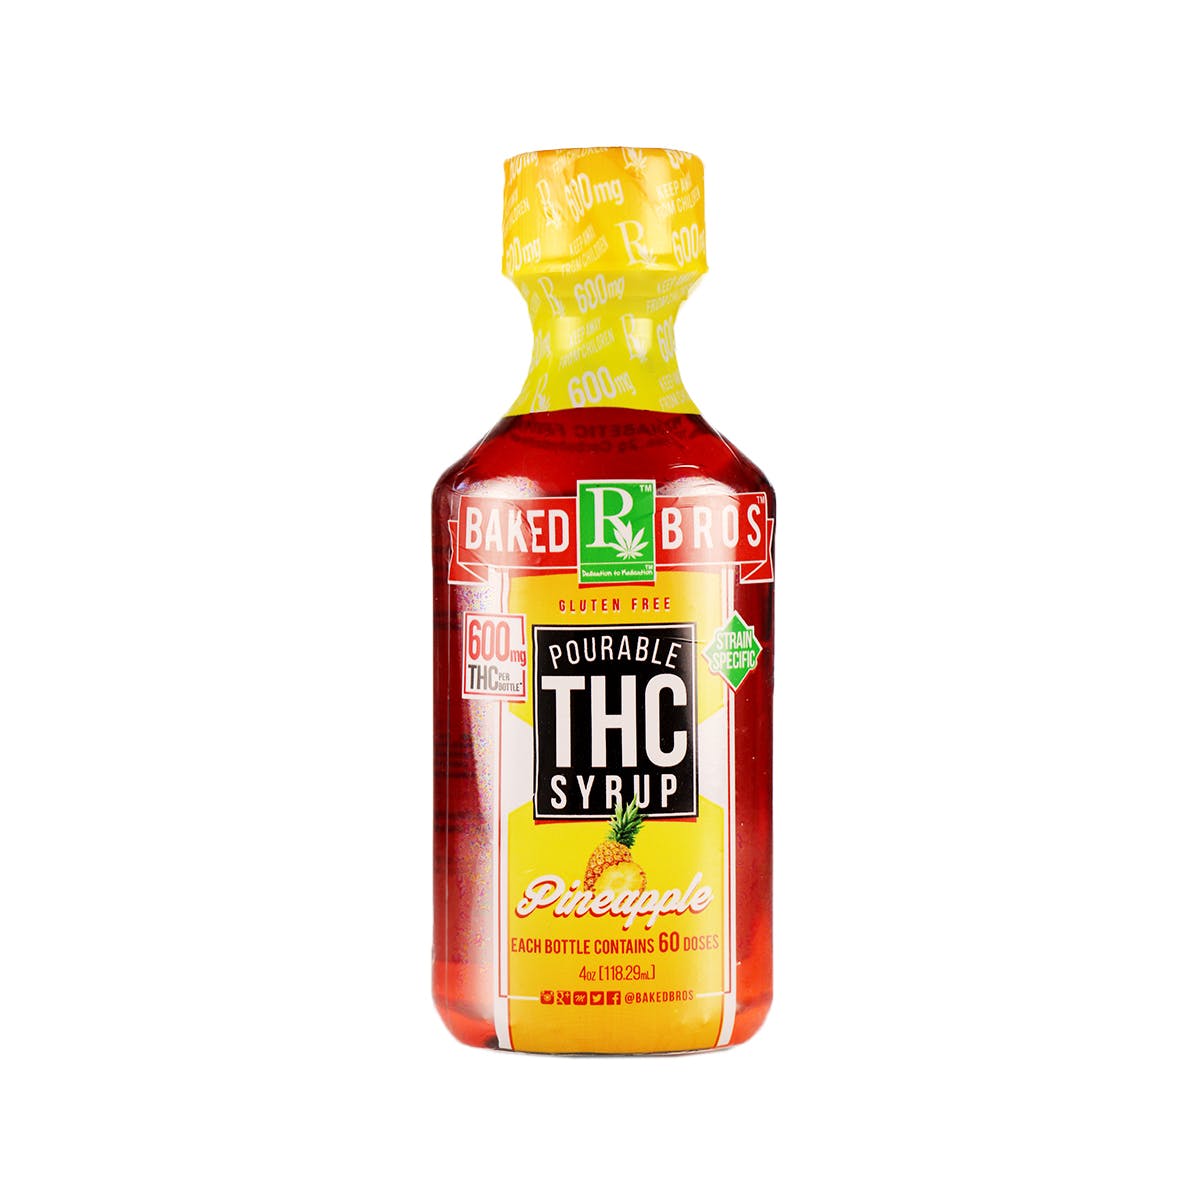 THC Syrup Pineapple 600mg